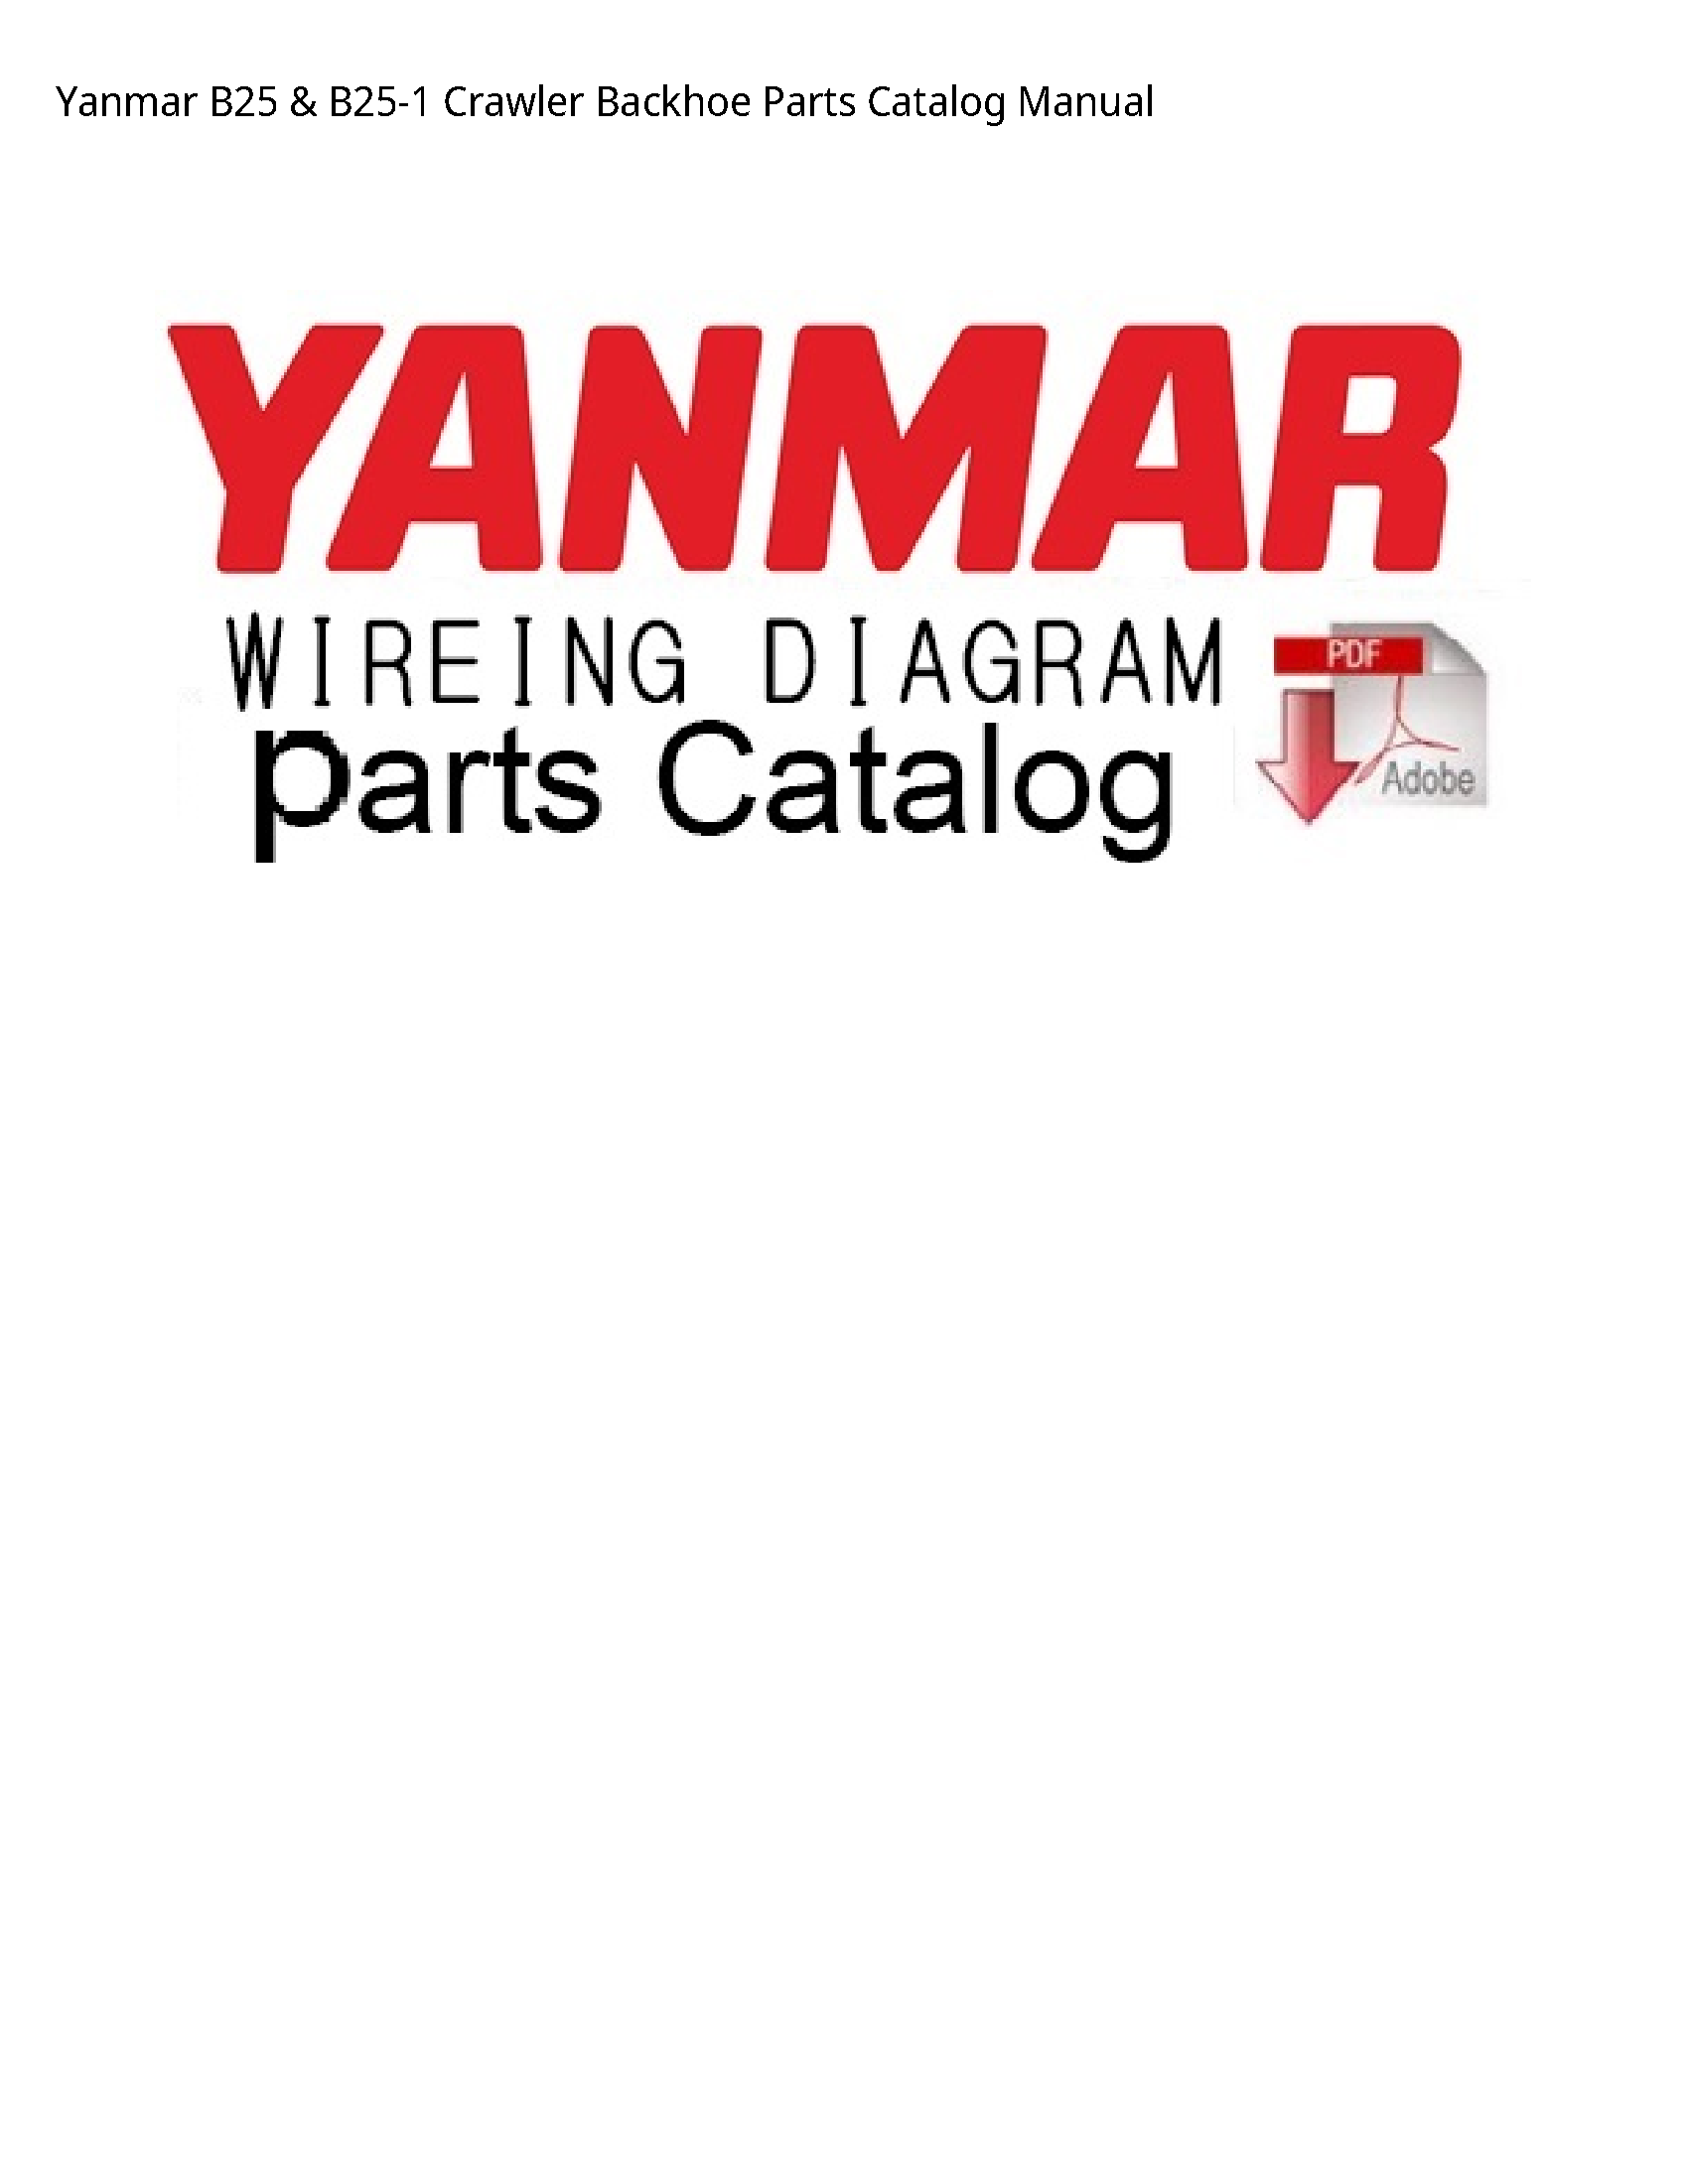 Yanmar B25 Crawler Backhoe Parts Catalog manual